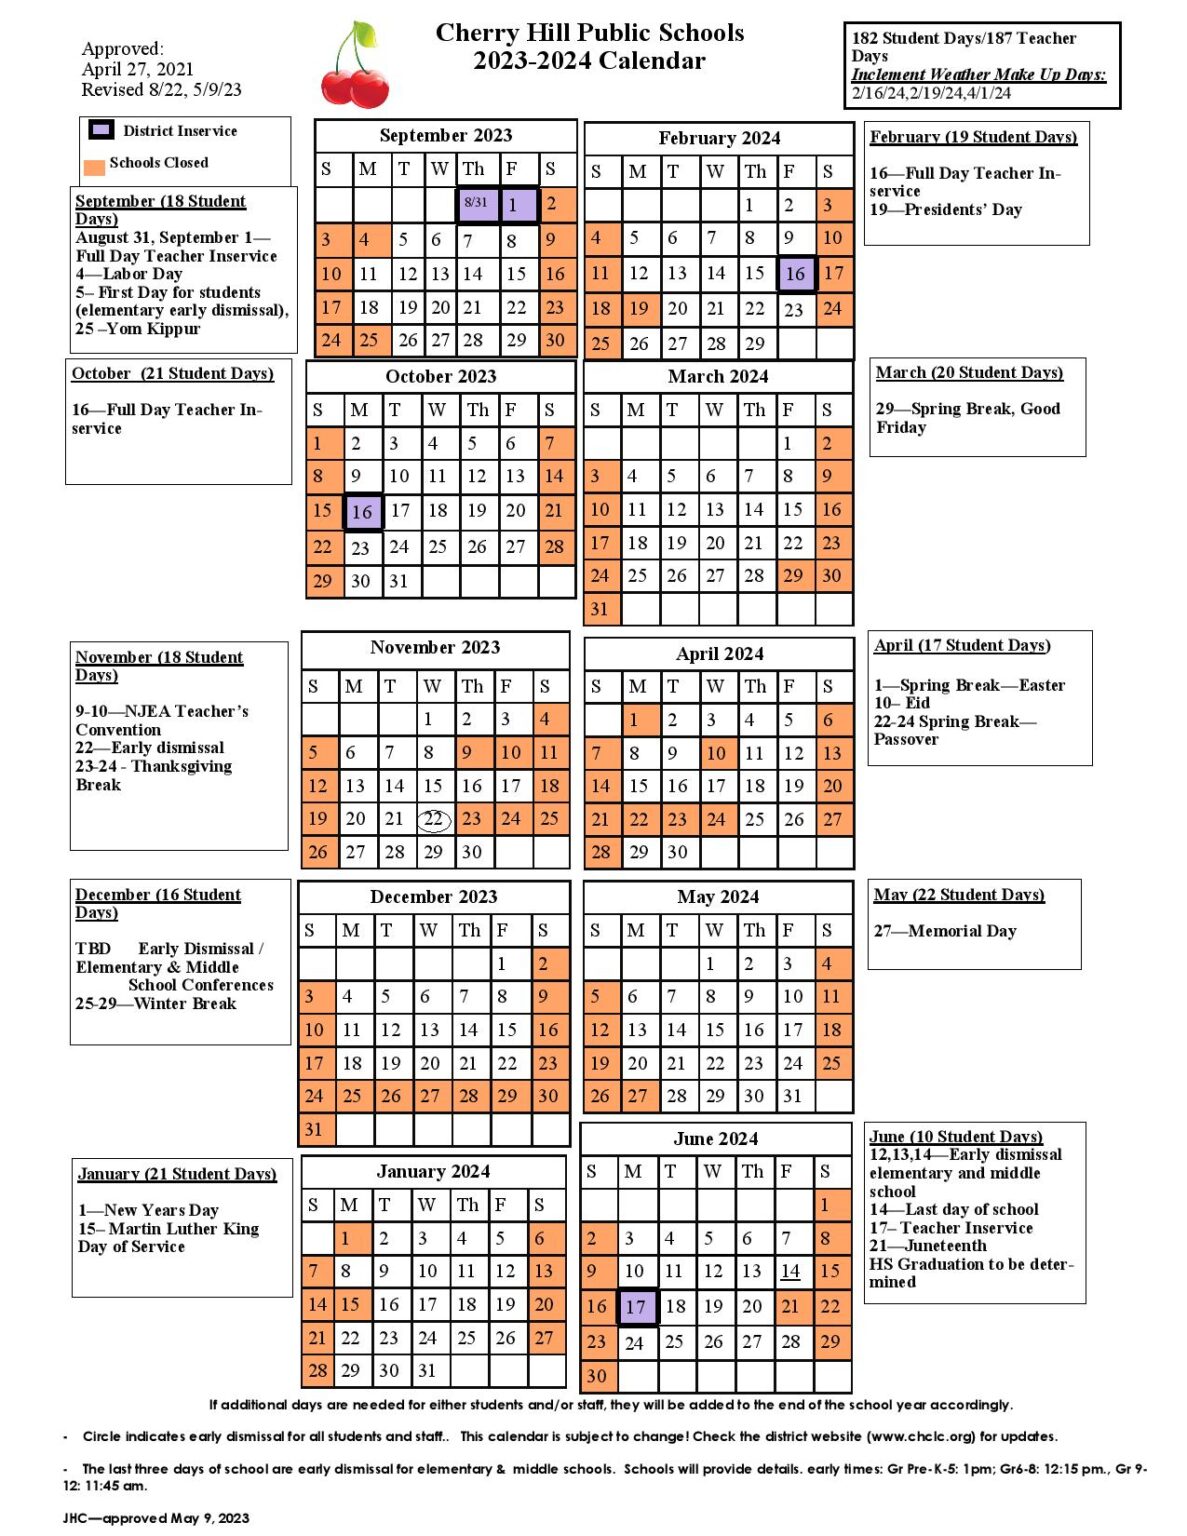 Cherry Hill Public Schools Calendar 20232024 in PDF School Calendar Info